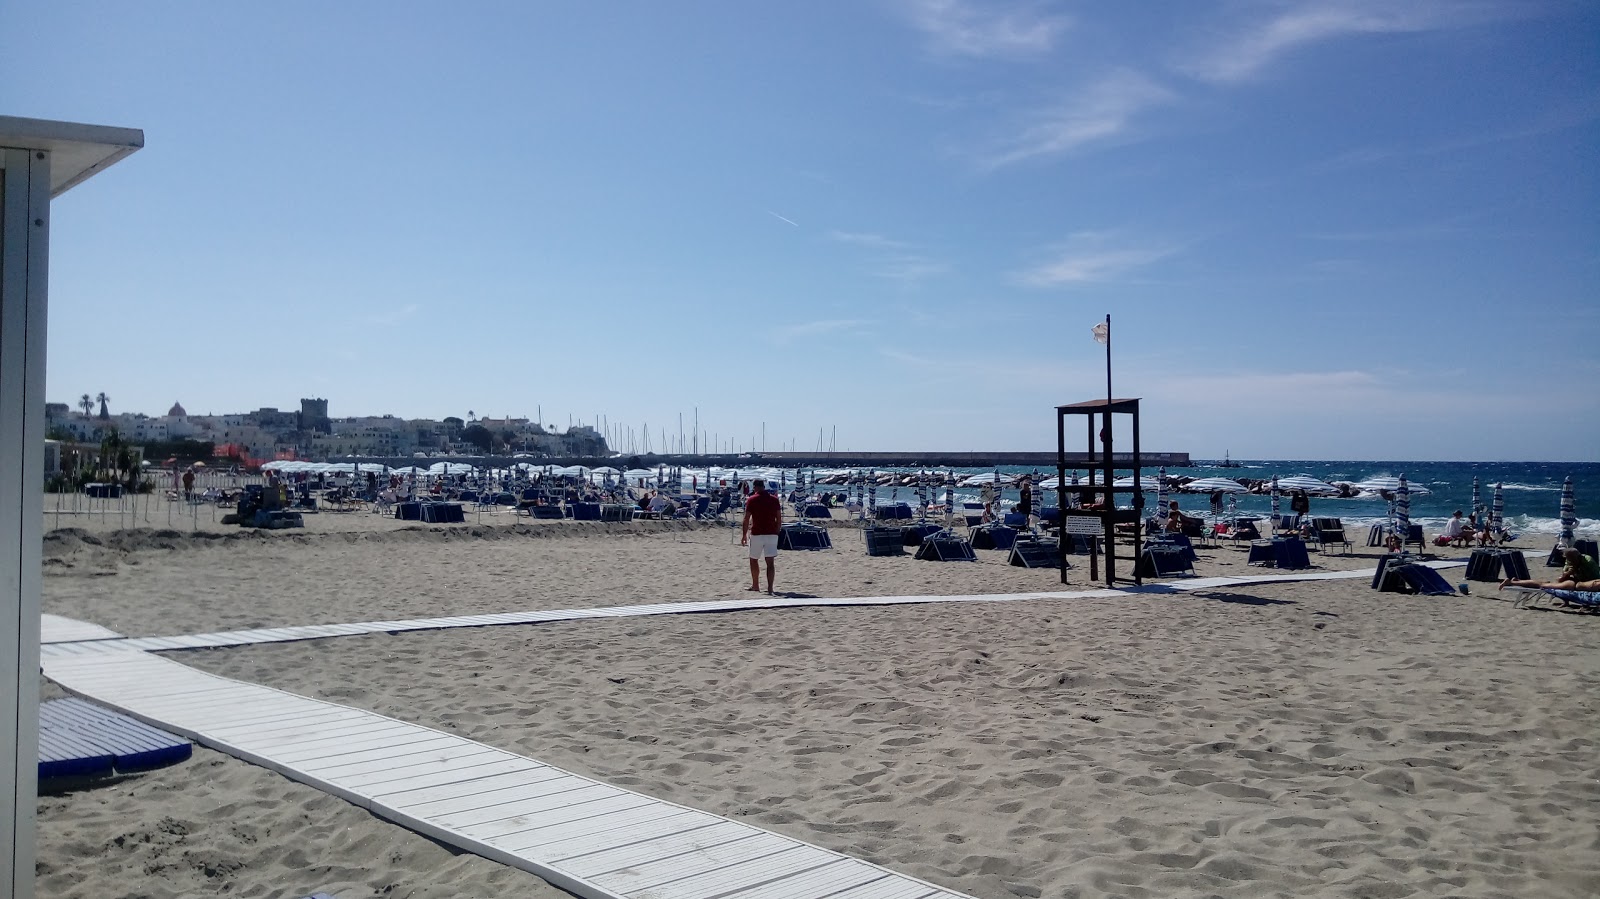 Foto av Spiaggia della Chiaia omgiven av klippor